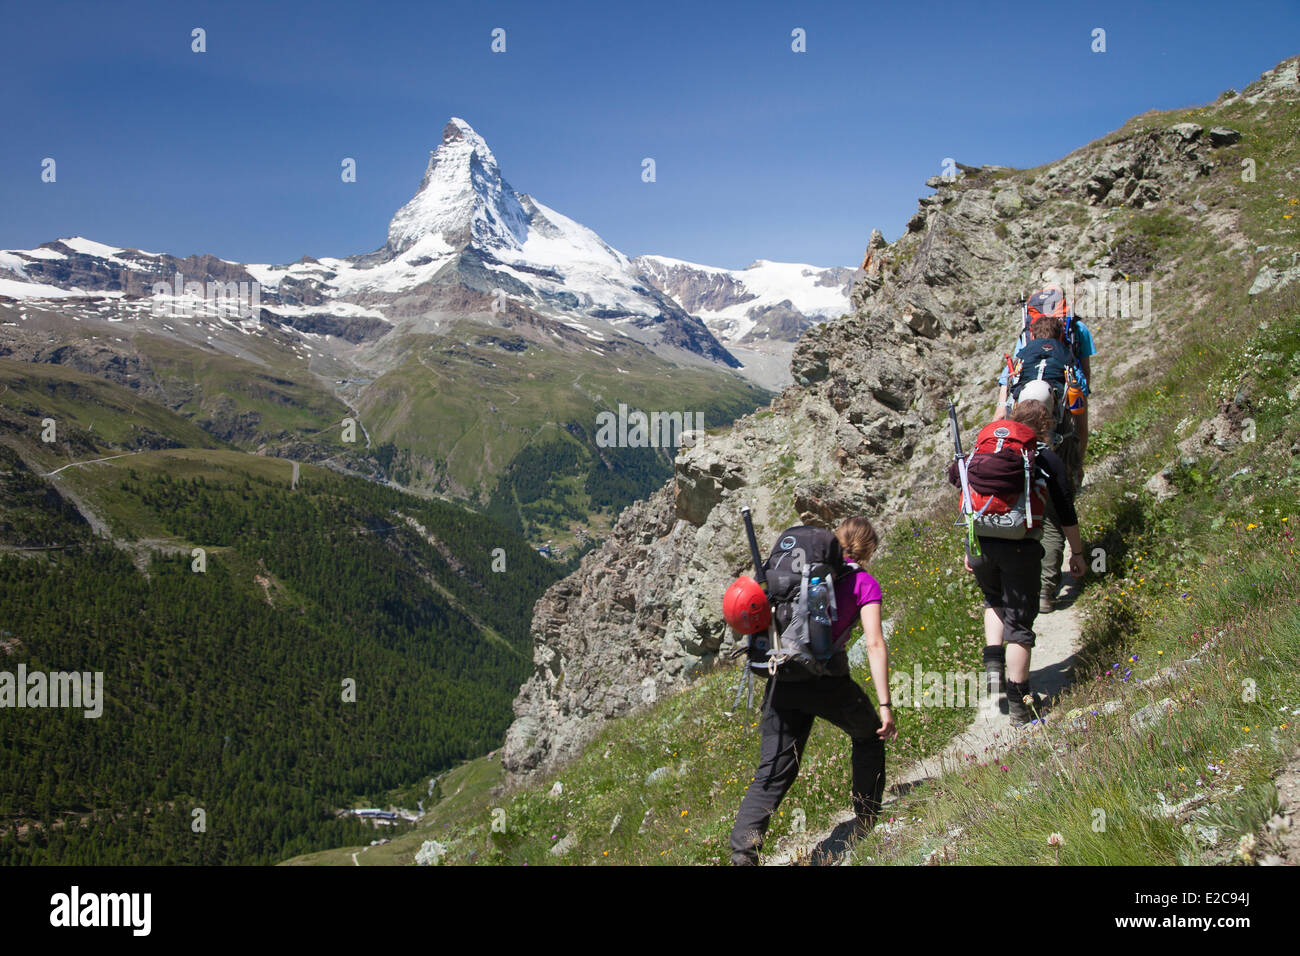 Switzerland, Canton of Valais, Zermatt, hikers near the Matterhorn (4478 m) Stock Photo